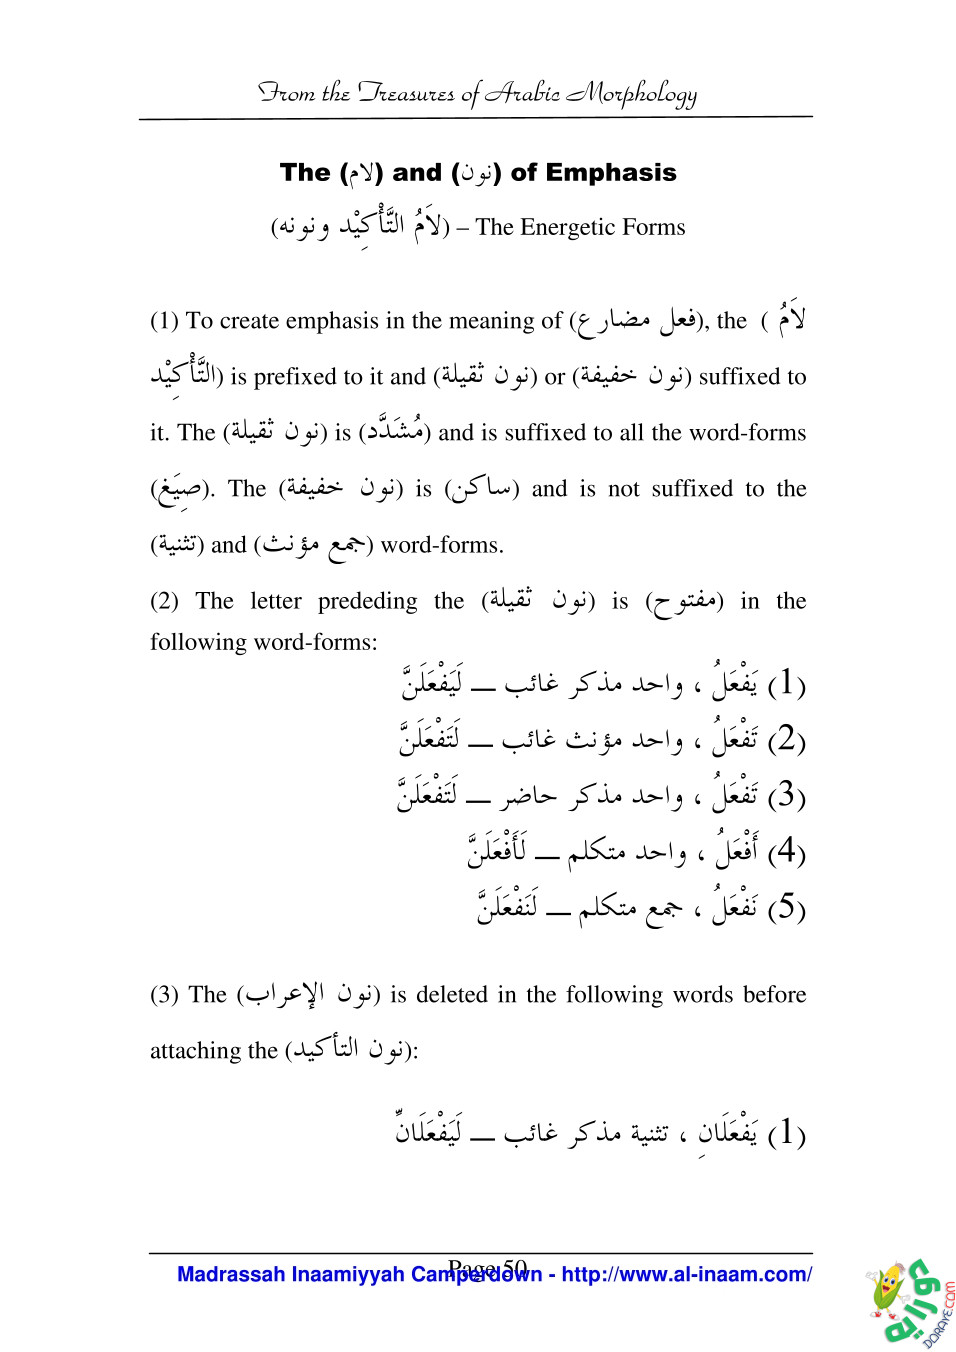 Treasures of Arabic Morphology 050 - كنوز الصرف العربي Treasures of Arabic Morphology